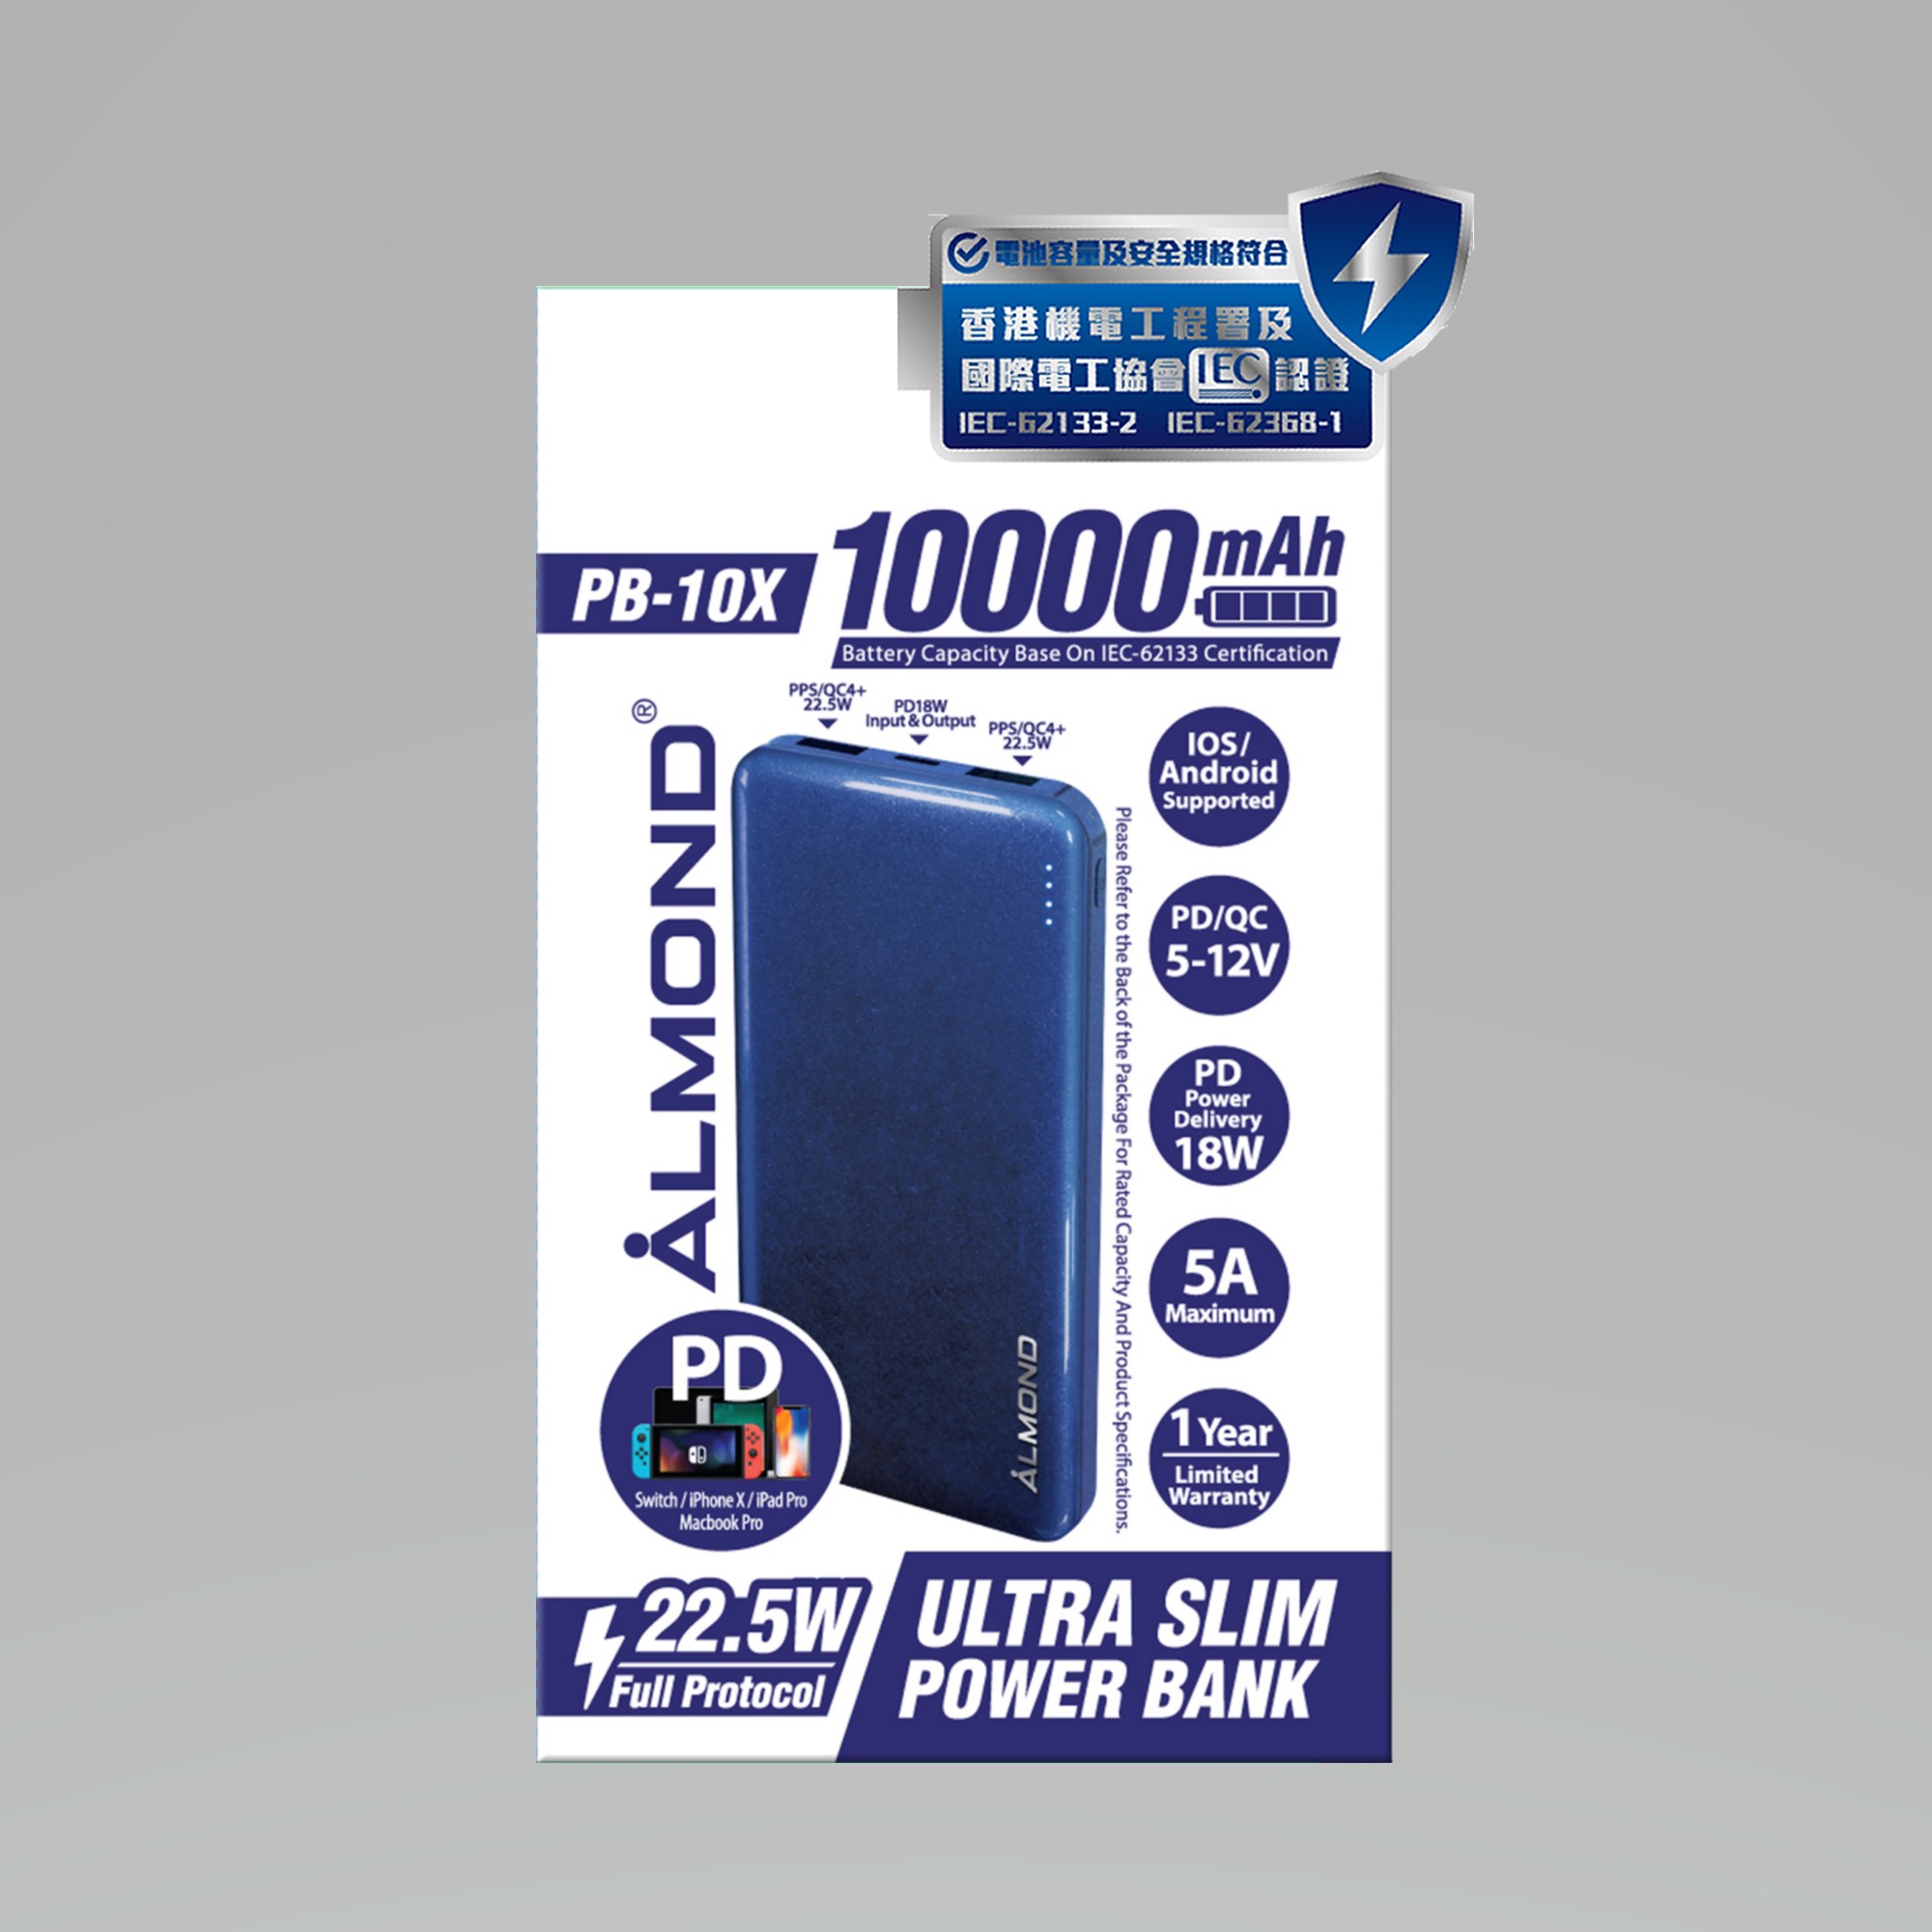 ALMOND PB-10X 10000mAh 移動電源 - 藍色, 深藍色, large image number 1